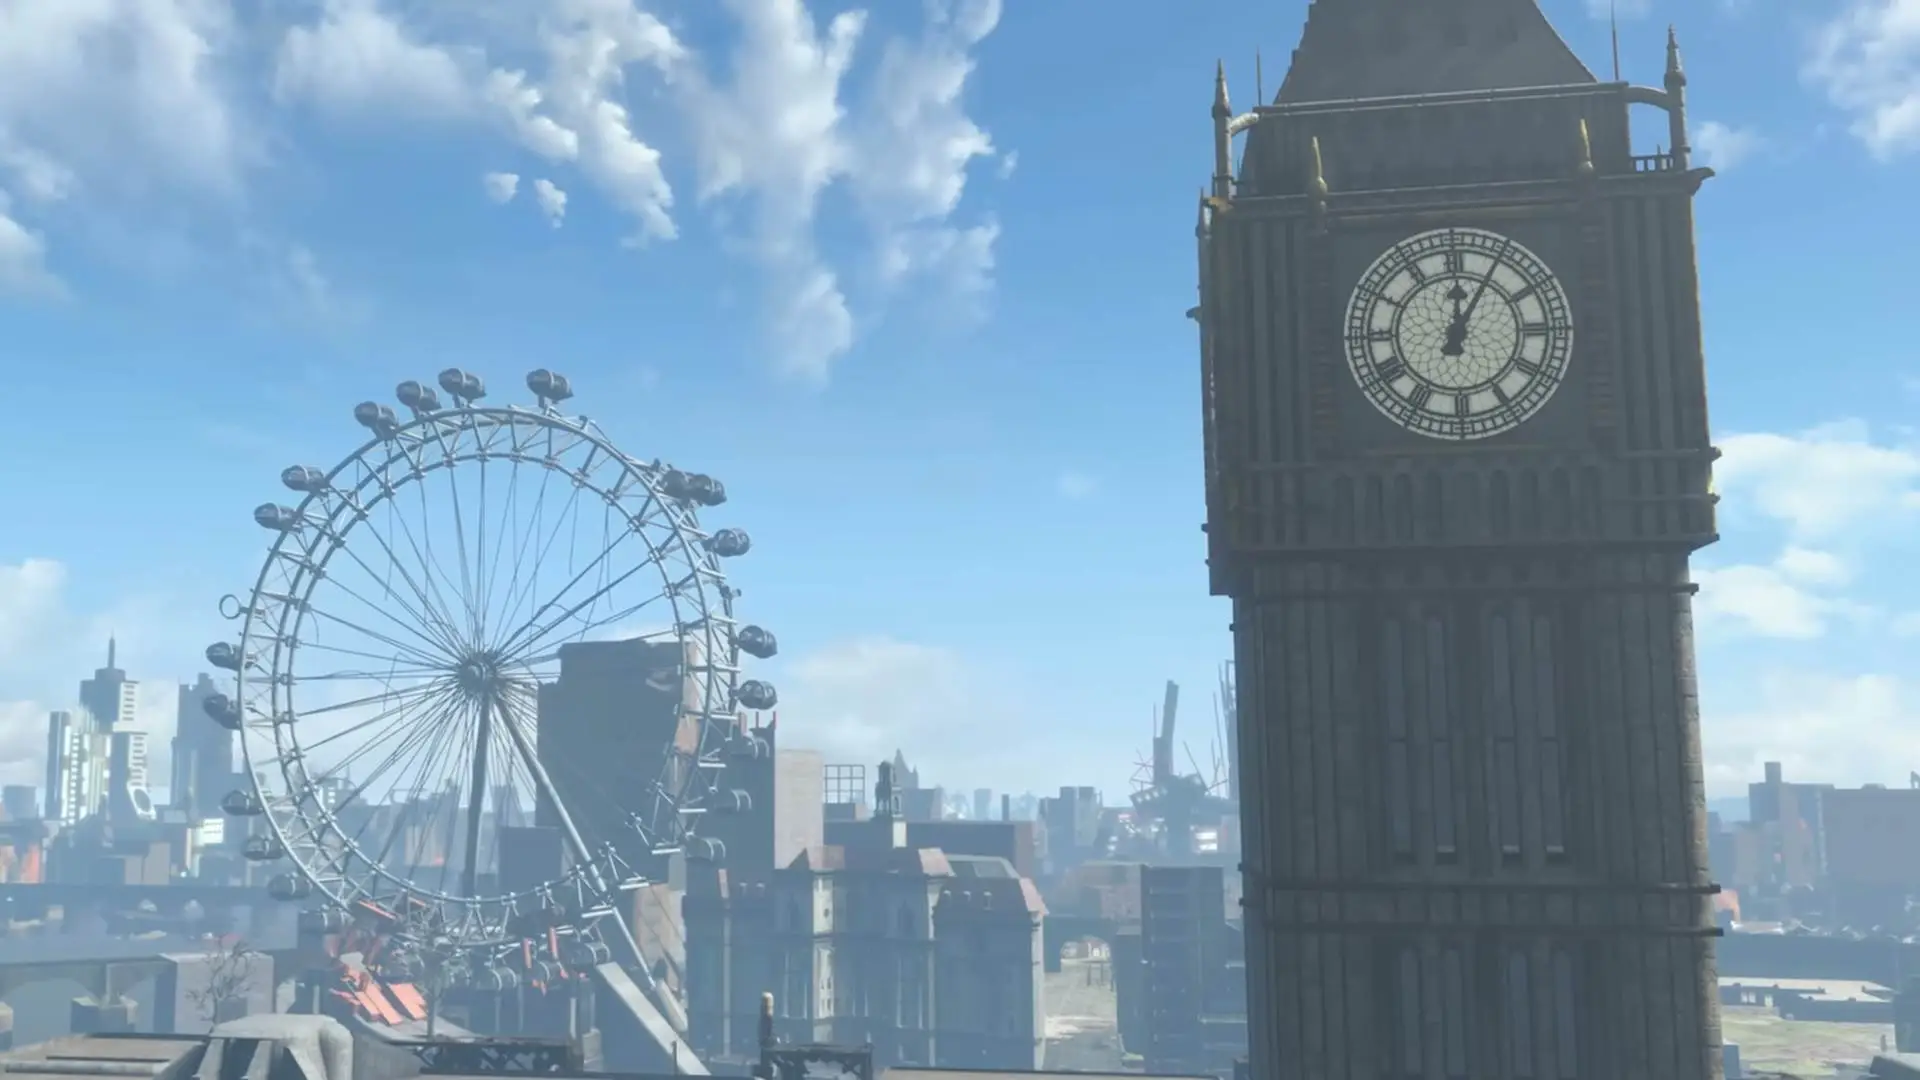 Fallout London